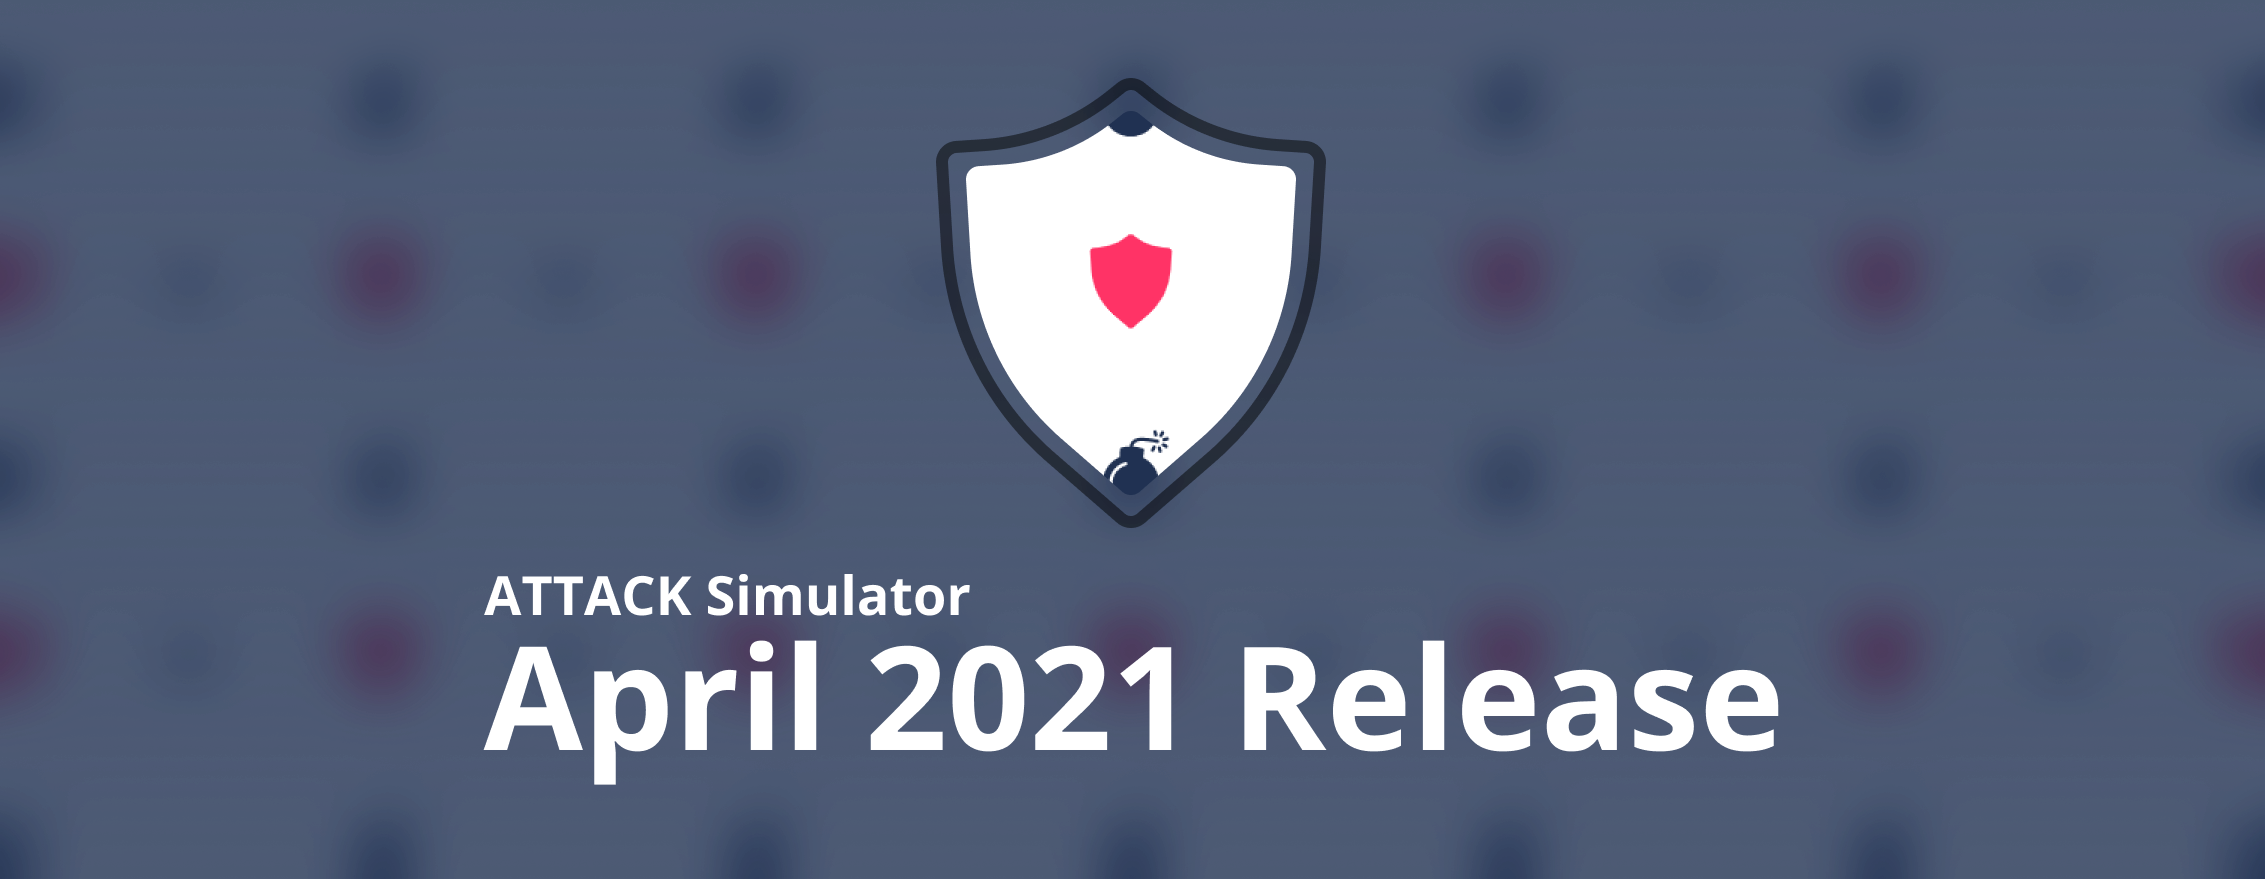 April 2021 Release